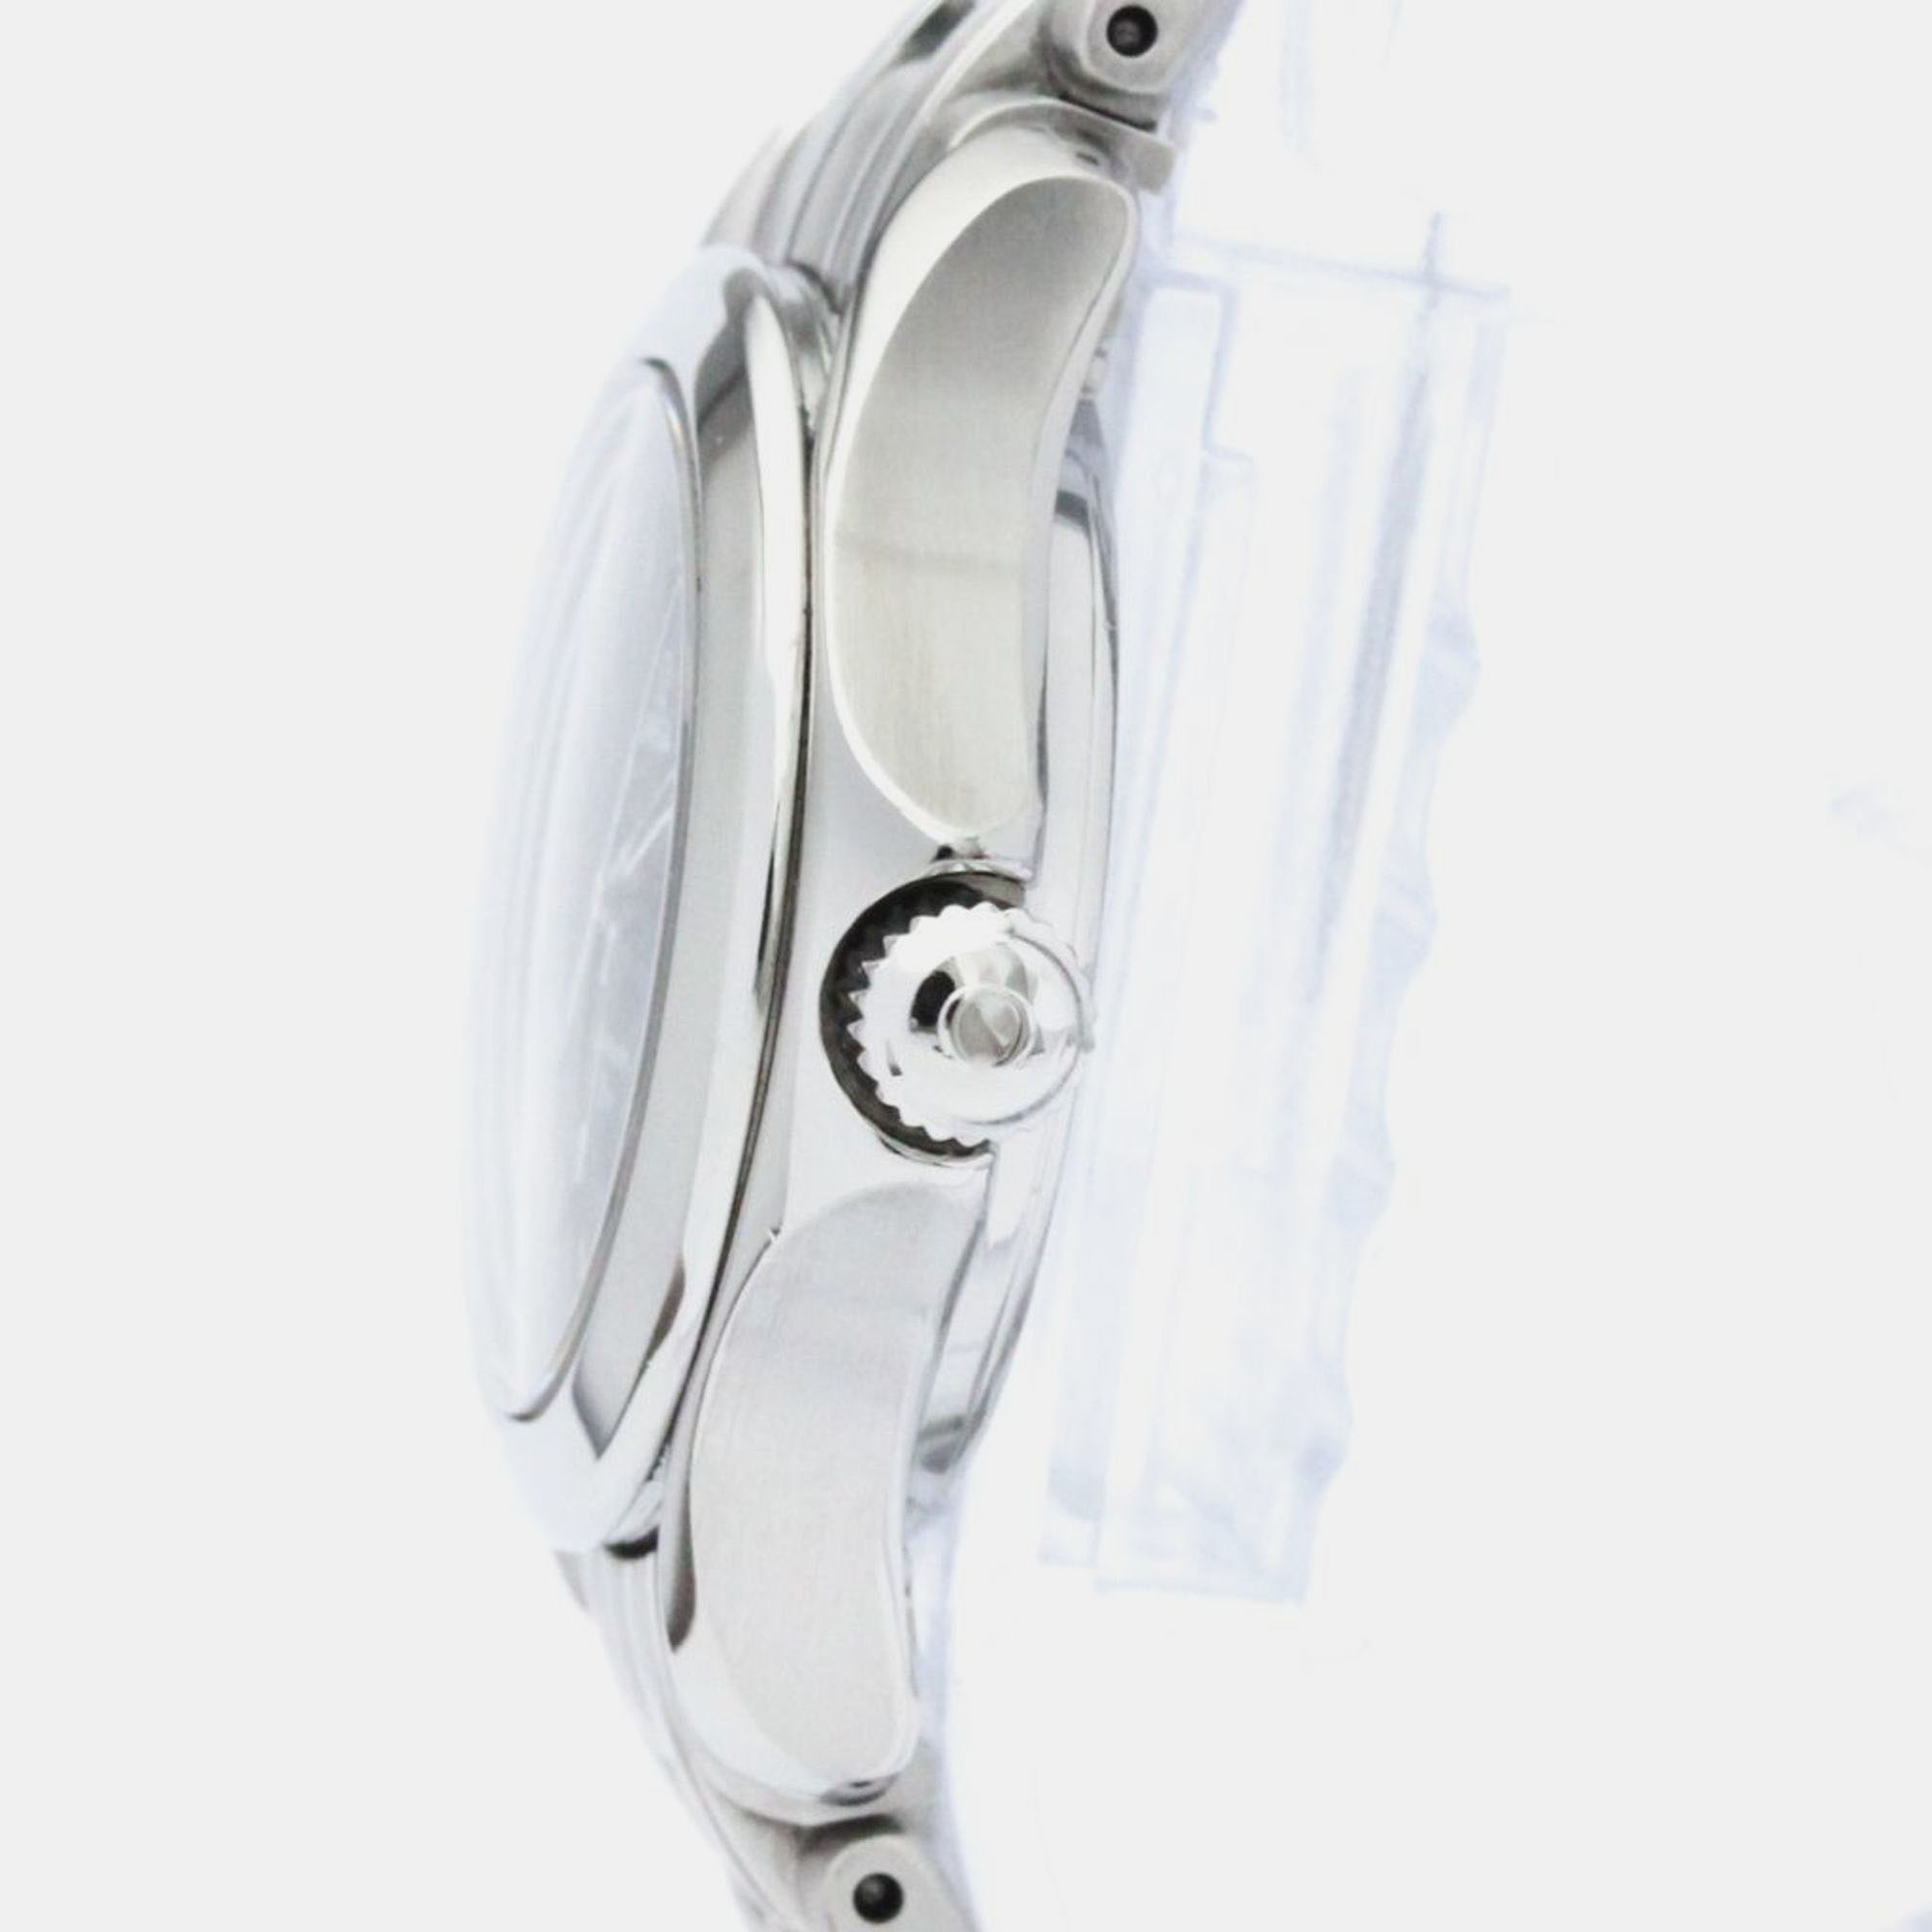 Omega Blue Stainless Steel Seamaster 2581.81 Quartz Women's Wristwatch 26 Mm